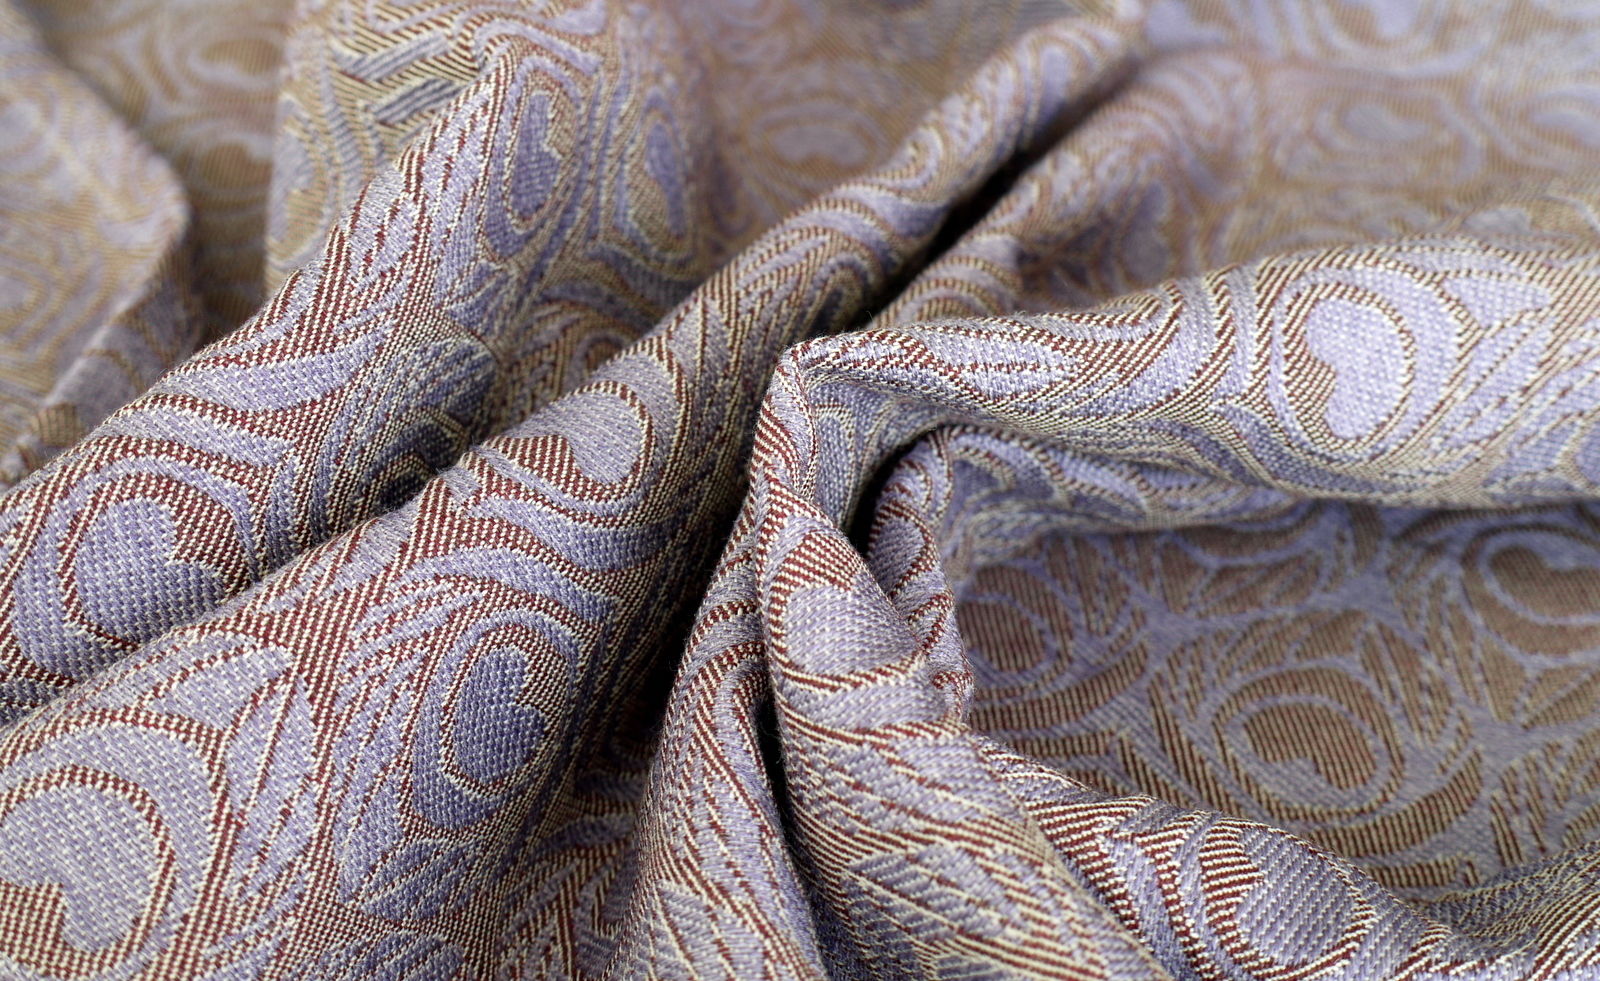 Artipoppe Argus The Princess Mayblossom Wrap (mulberry silk, merino) Image